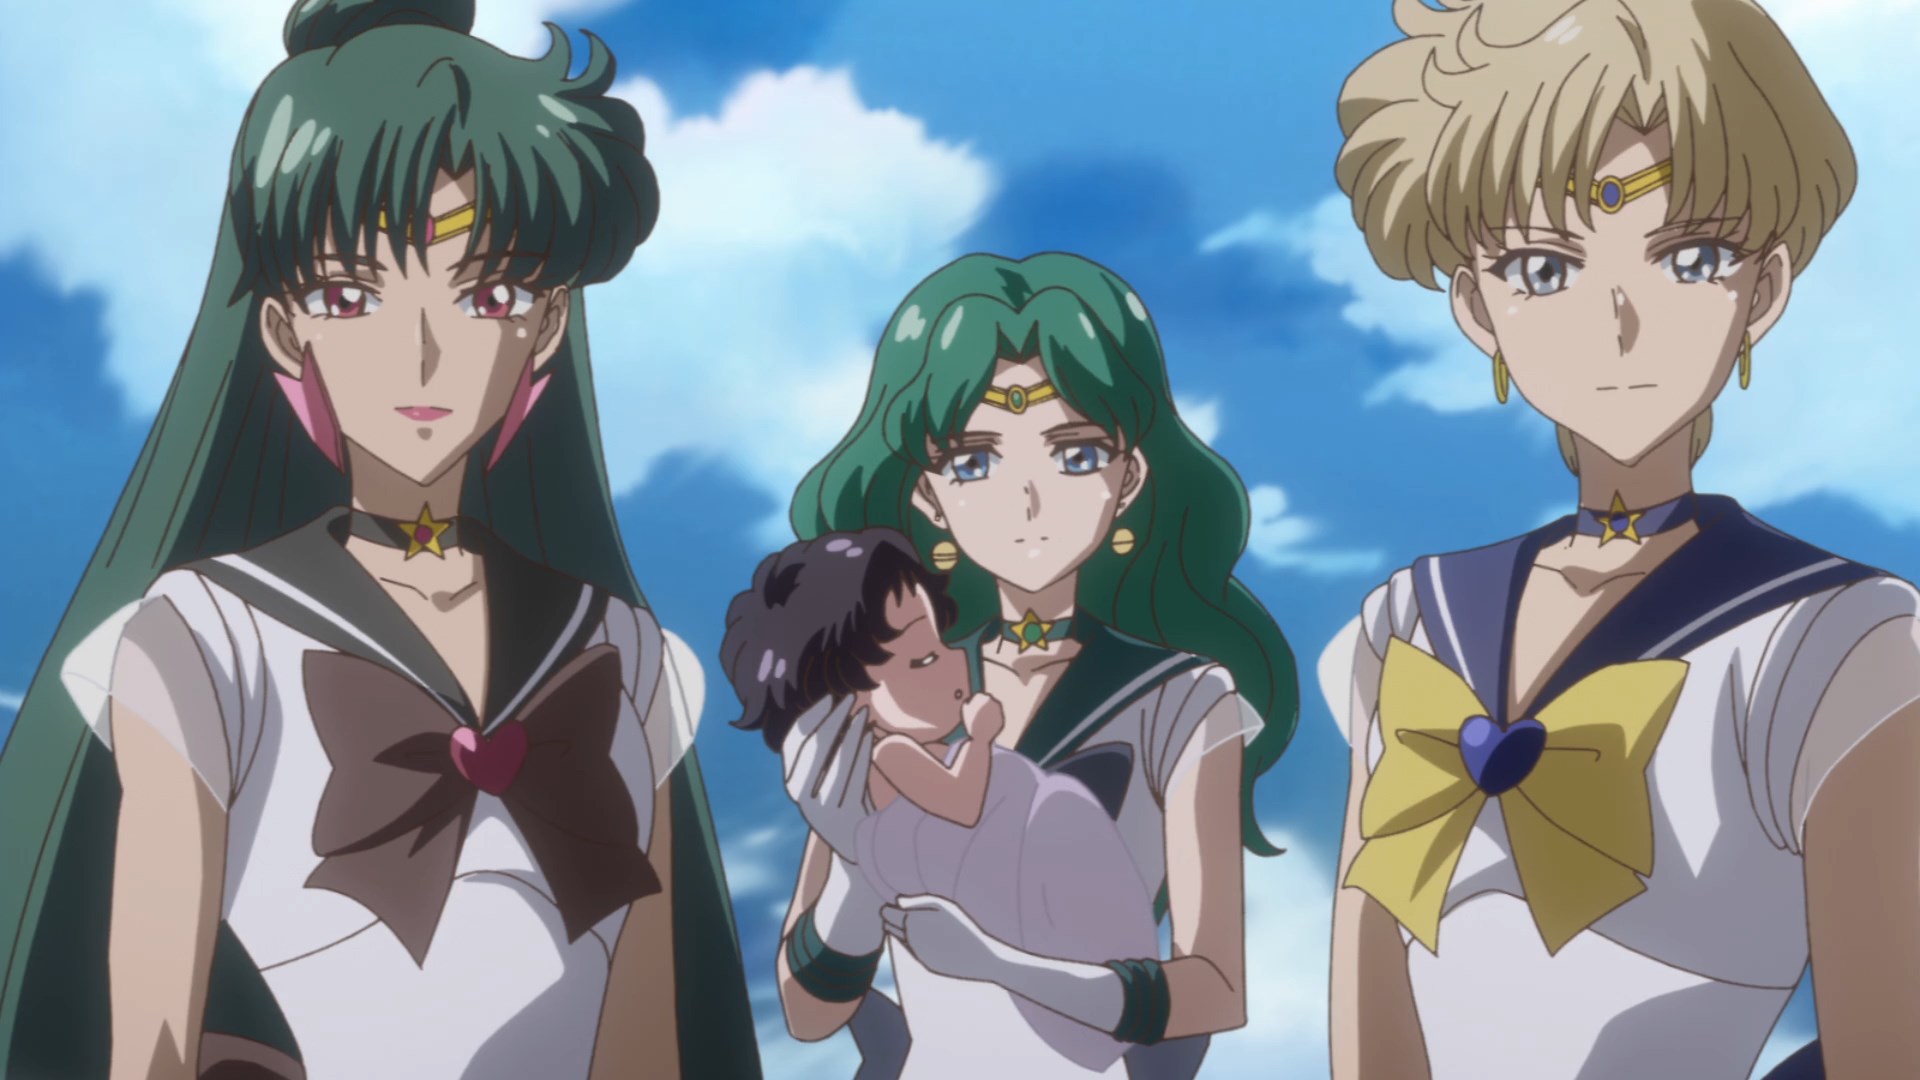 VIZ Watch Sailor Moon Episodes for Free